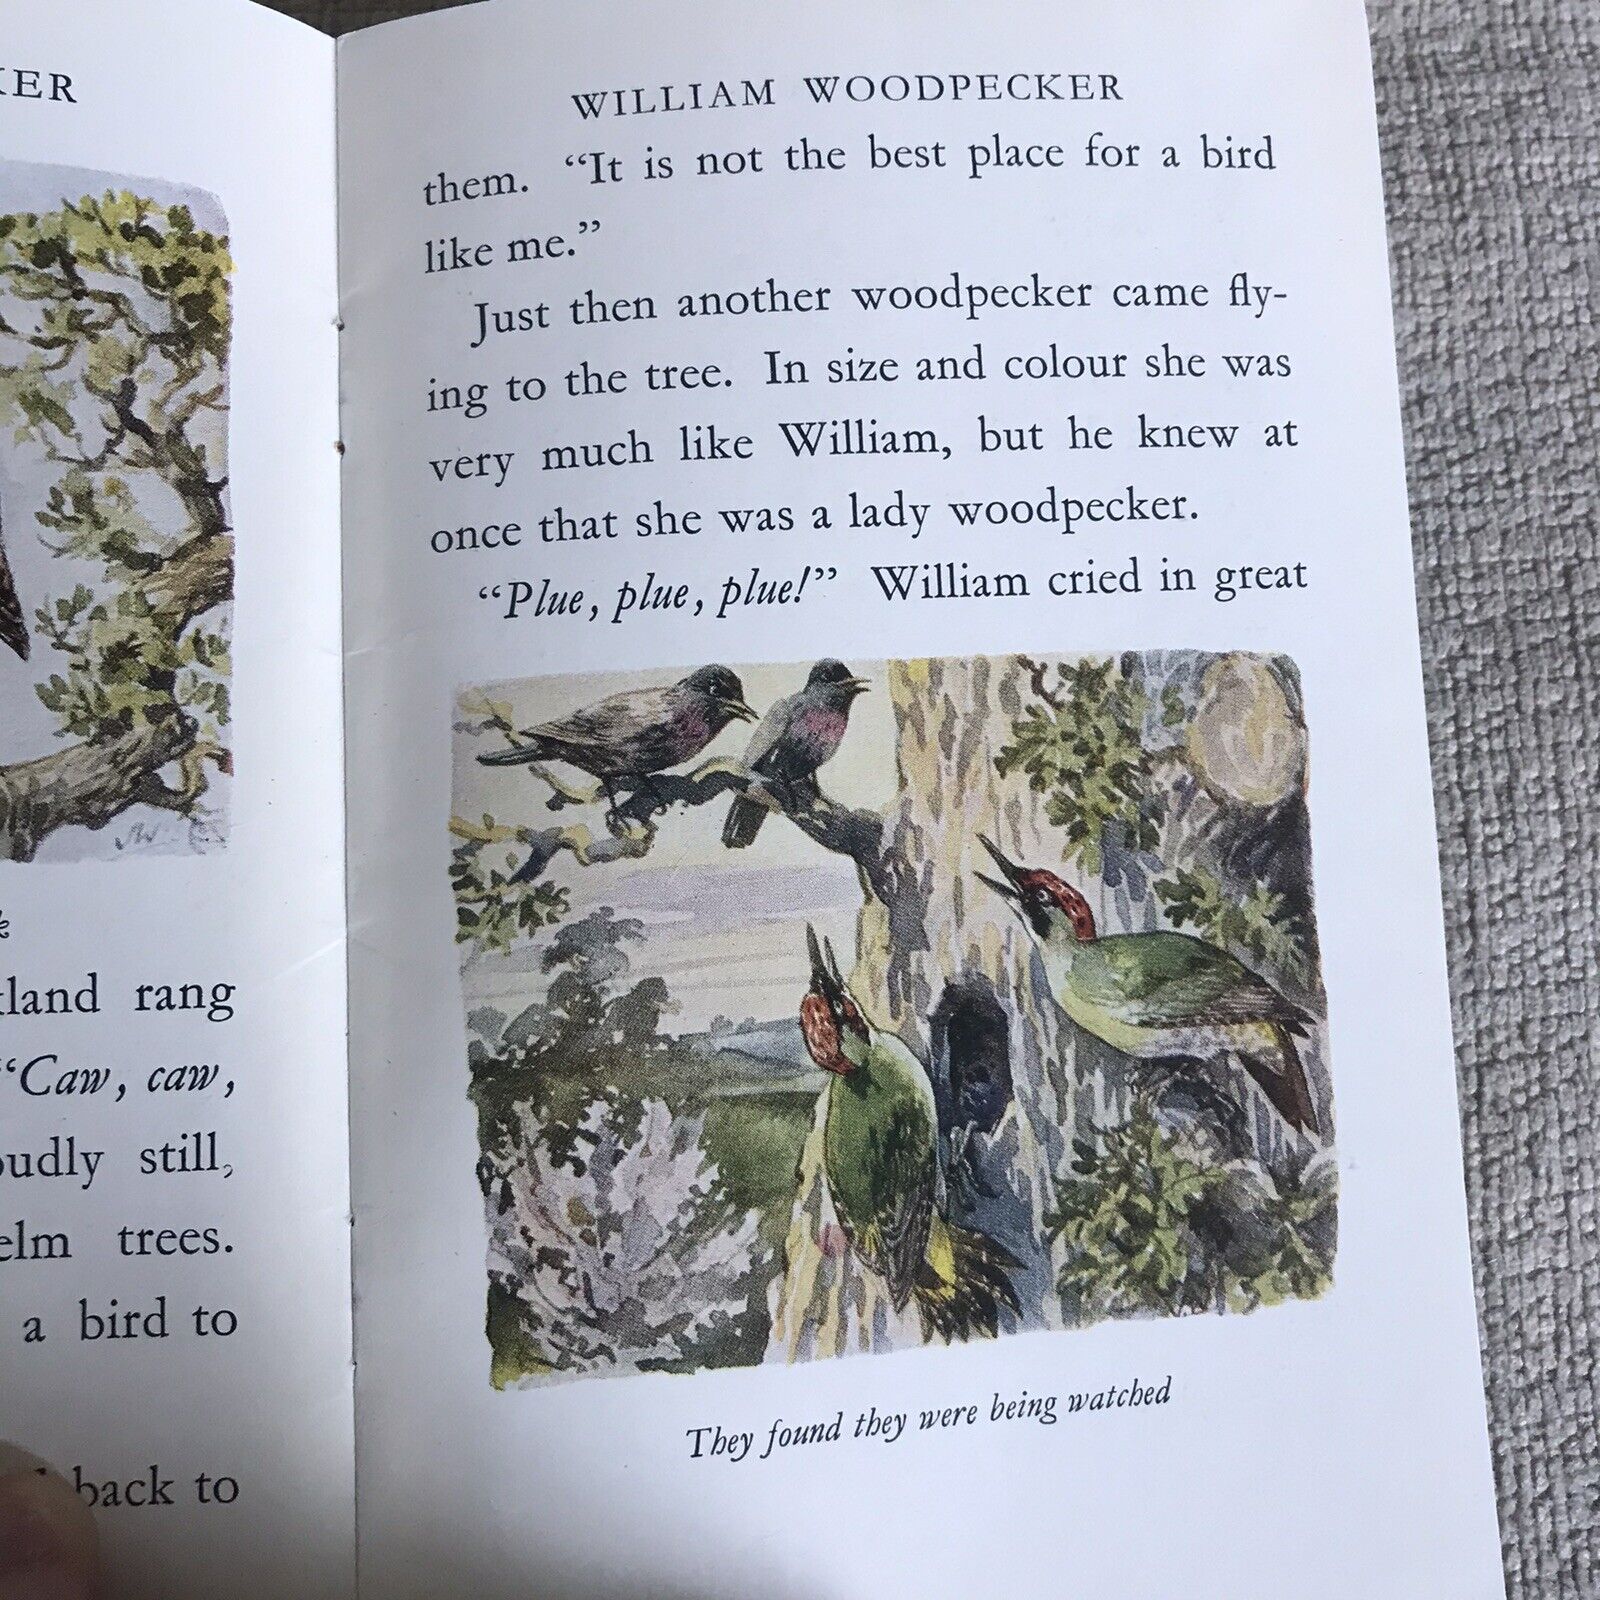 1950 Tales Of The Wild Folk: William Woodpecker - Cecily M. Rutley (Joan Wanklyn Honeyburn Books (UK)